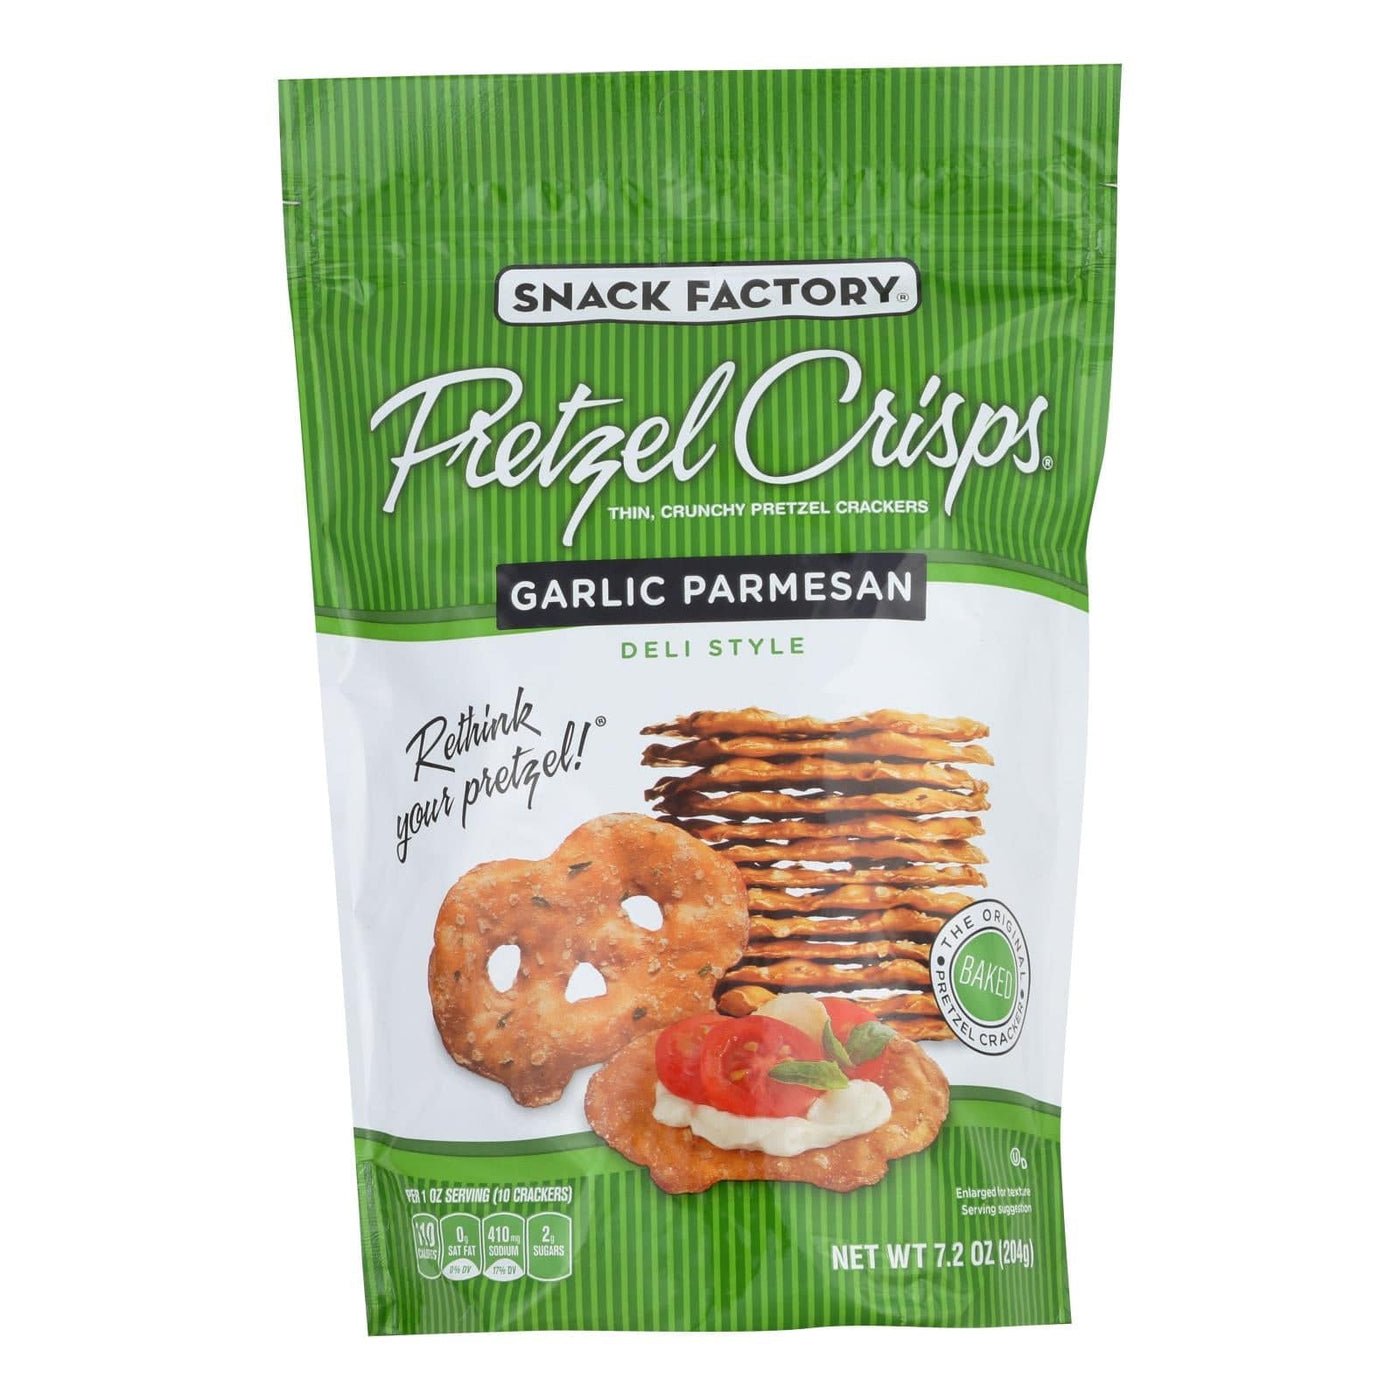 Buy Snack Factory Garlic Parmesan Pretzel Crisps  - Case Of 12 - 7.2 Oz  at OnlyNaturals.us